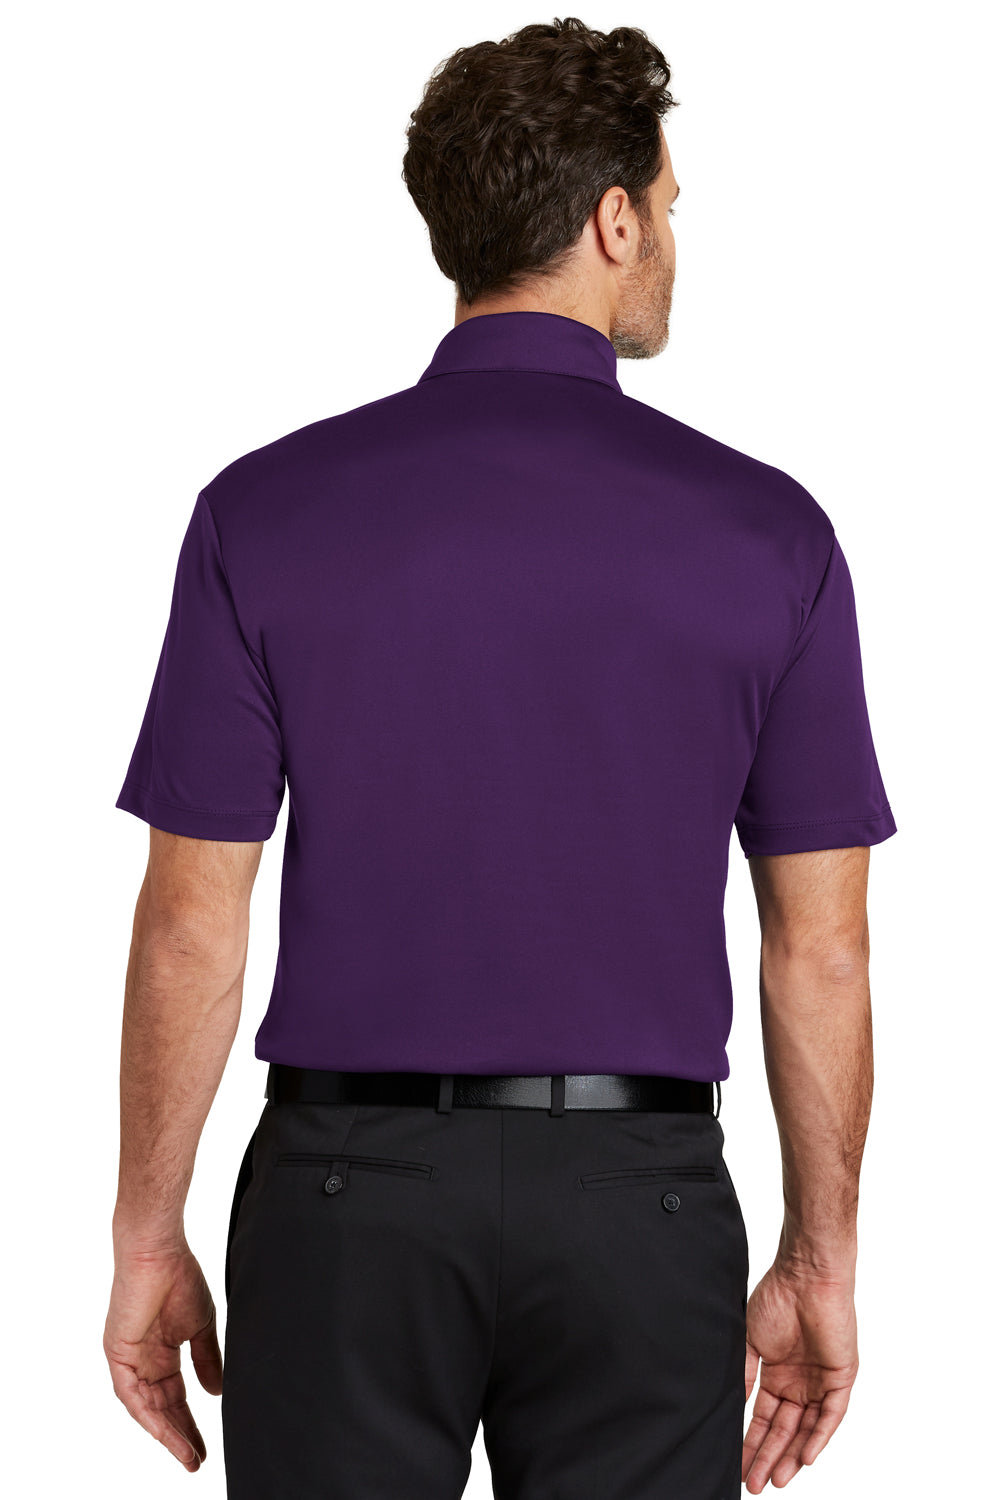 Port Authority K540 Mens Silk Touch Performance Moisture Wicking Short Sleeve Polo Shirt Purple Back